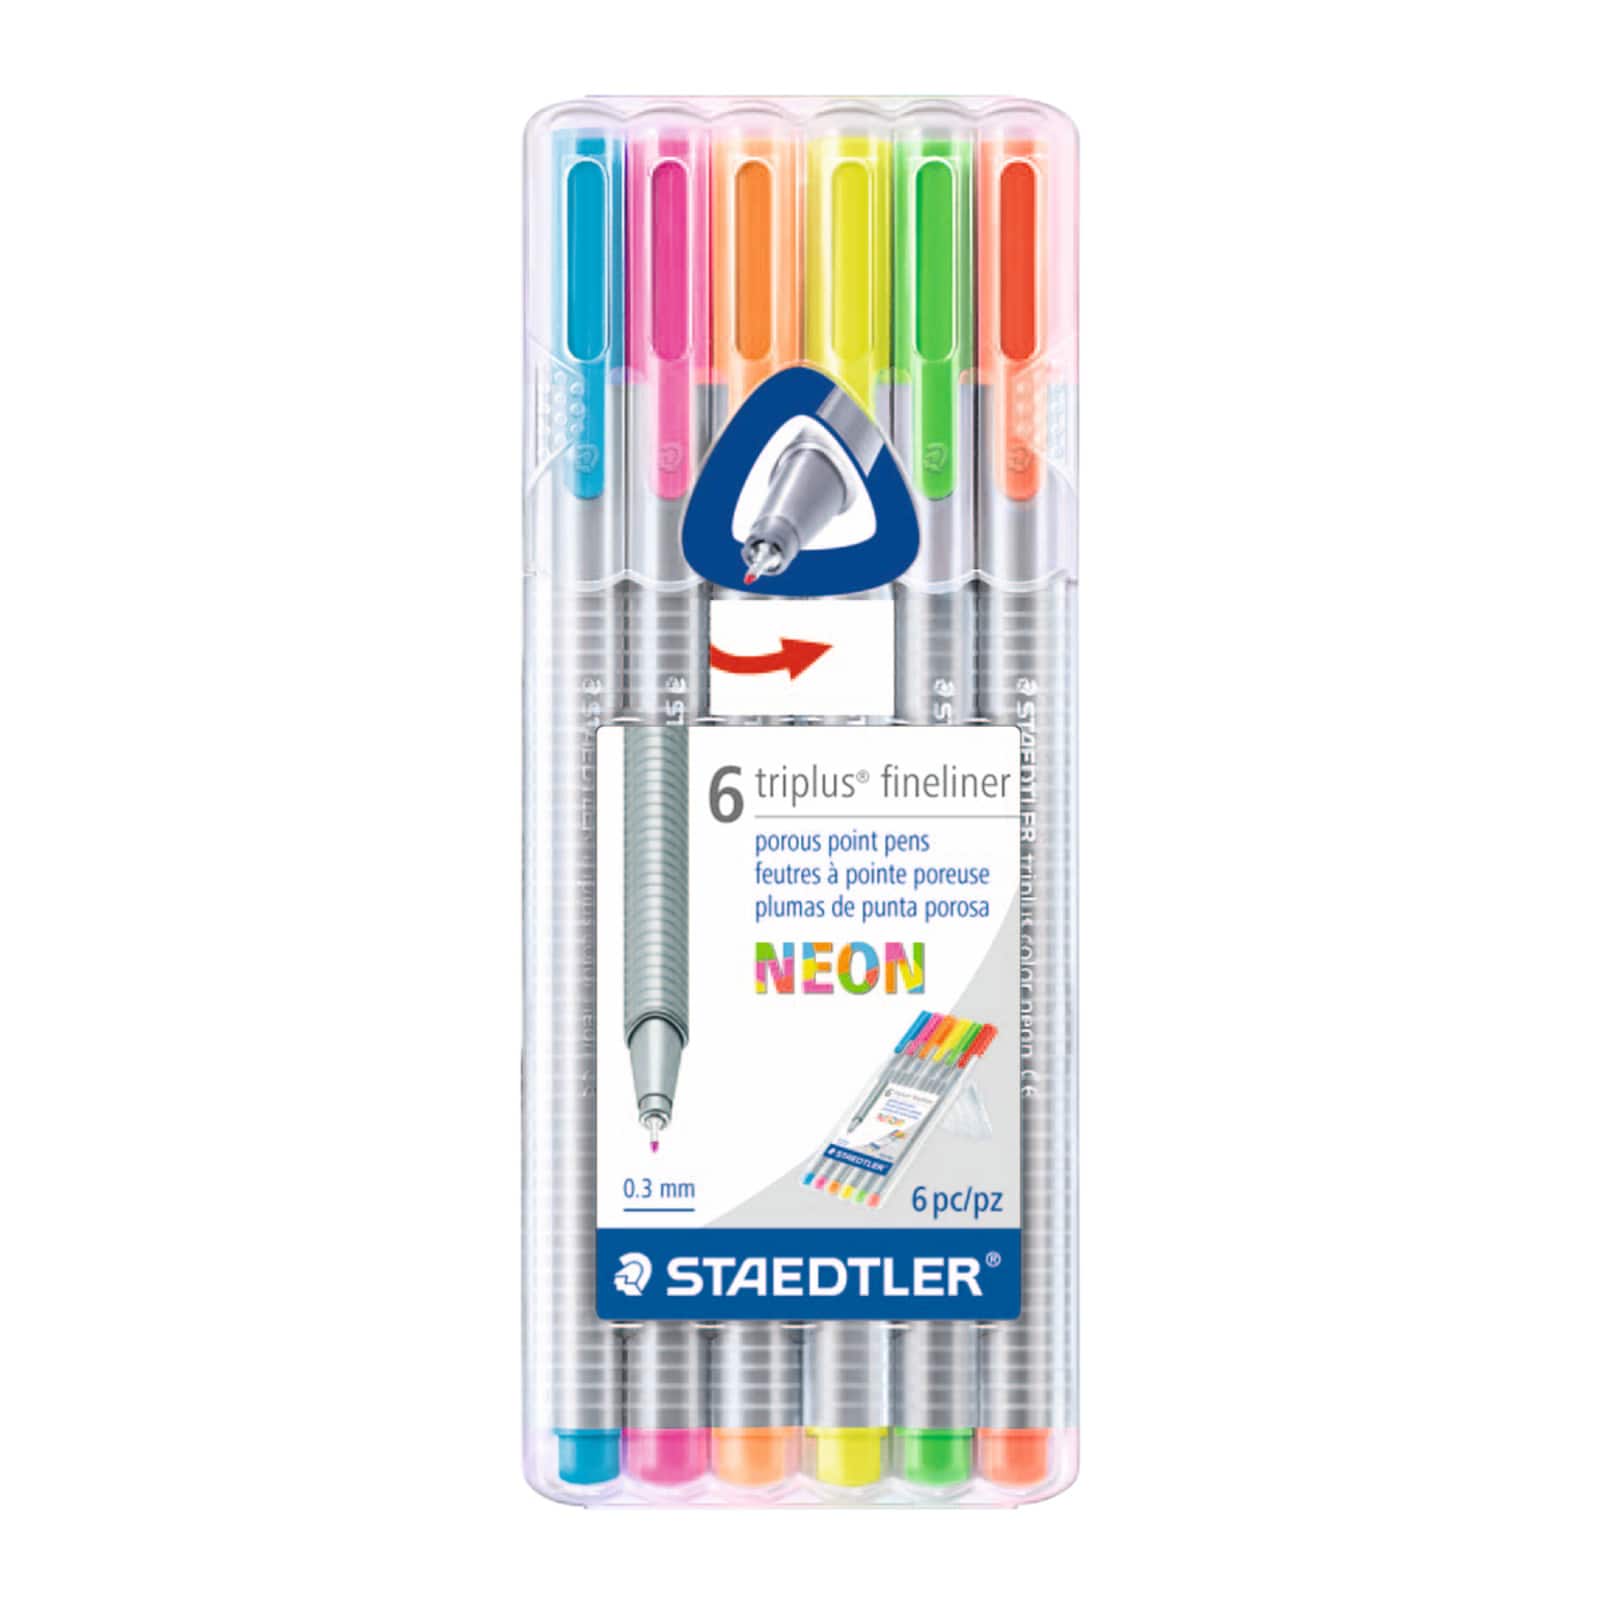 Staedtler Triplus Fineliner Pen - 0.3 mm - Assorted Colors - Set